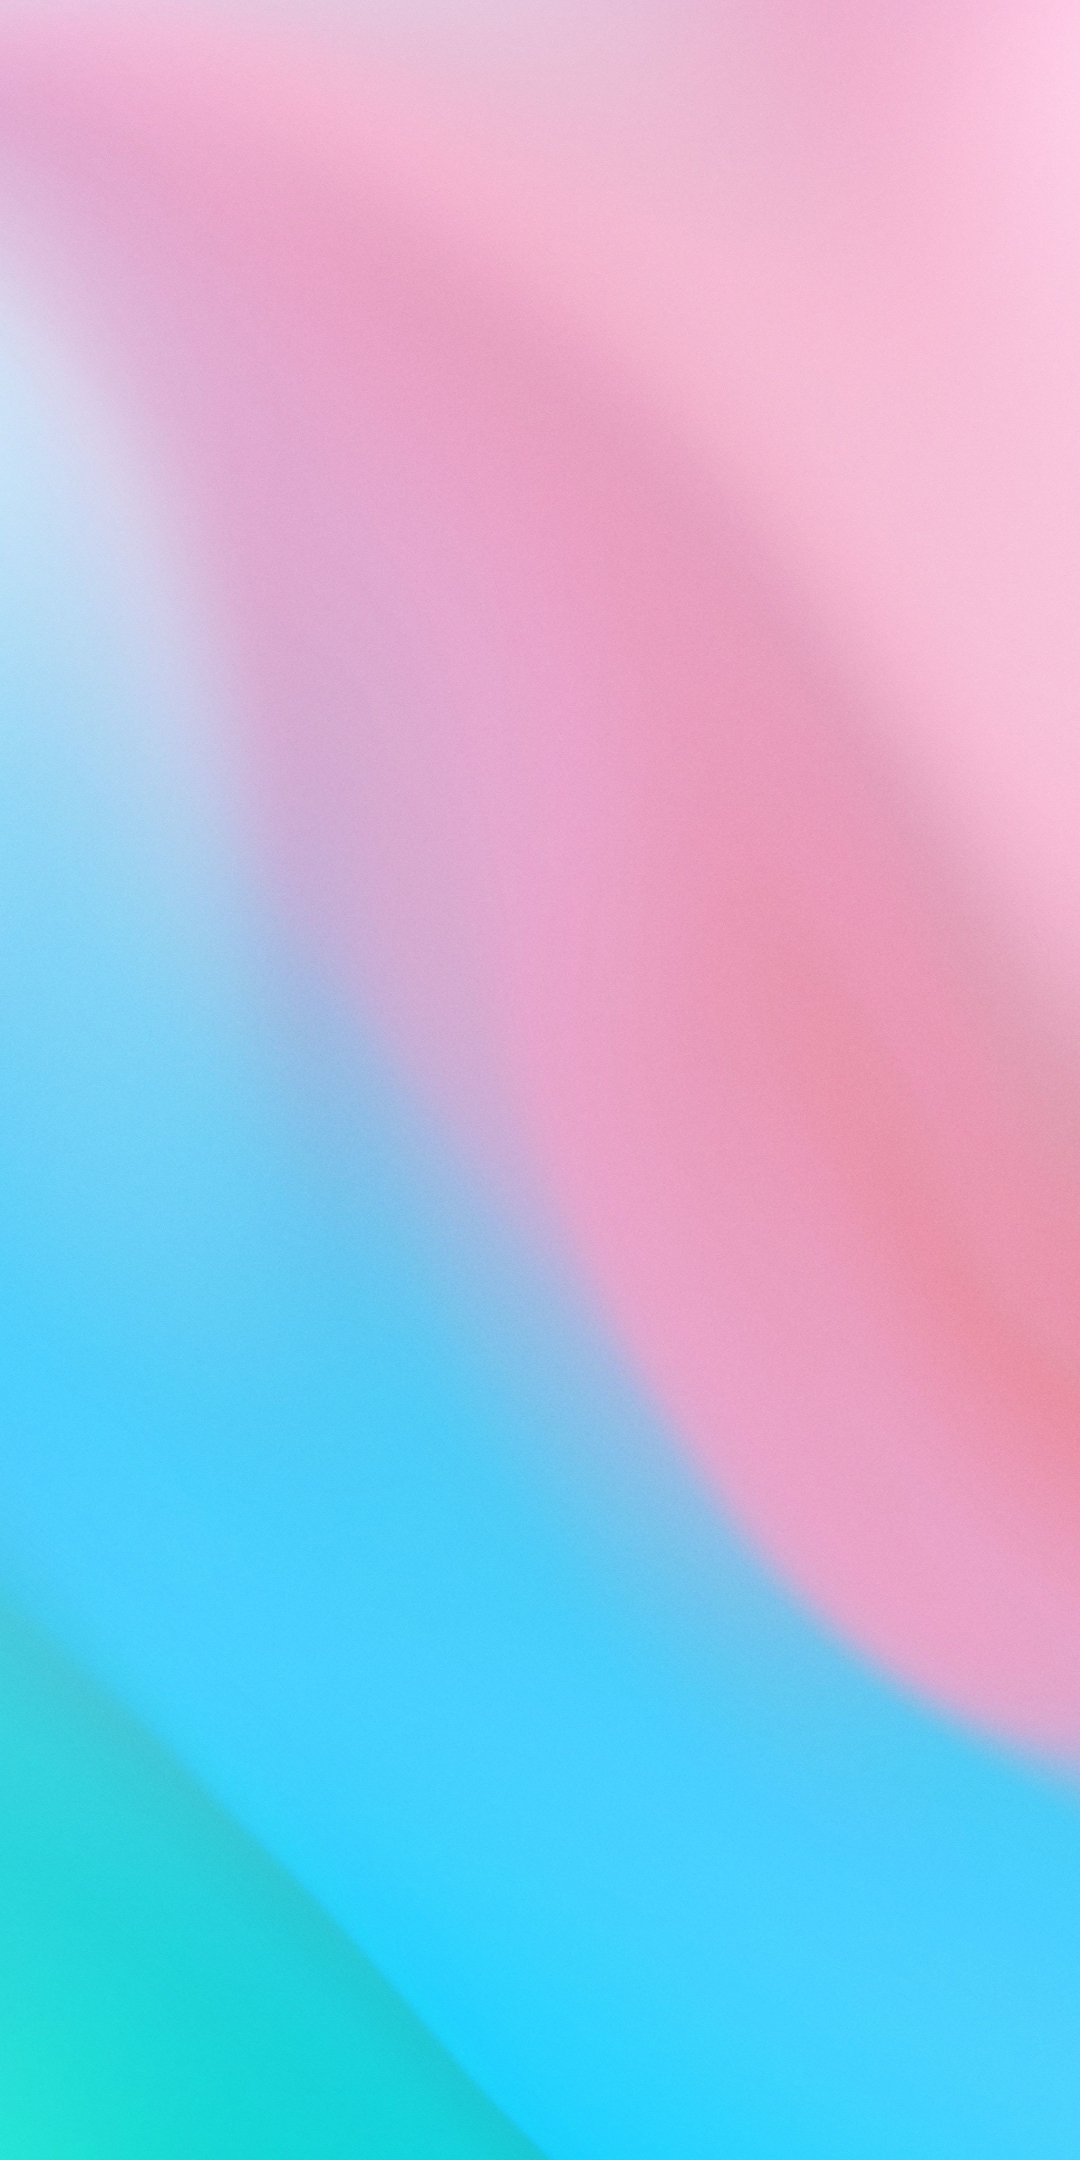 Paint, stains, blend, blue-pink, gradient, 1080x2160 wallpaper